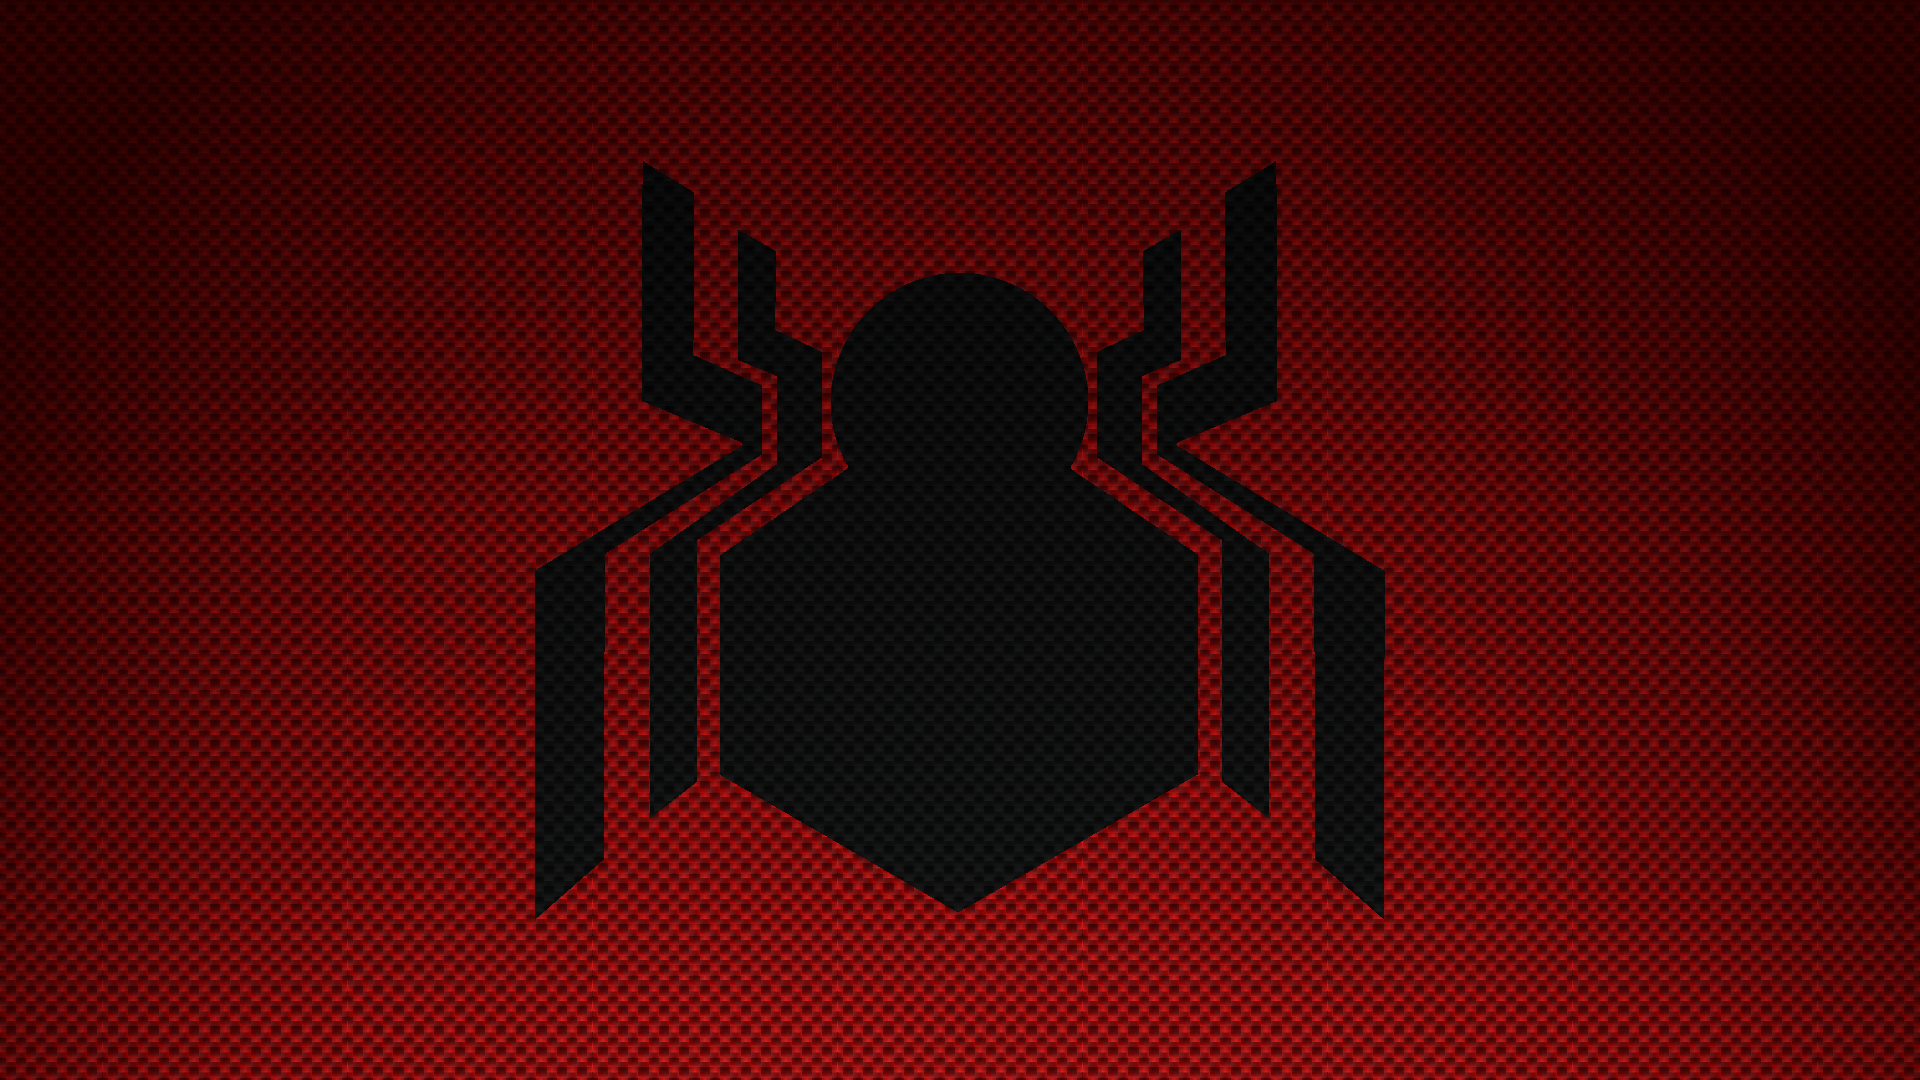 Wallpaper ID 69830  spiderman superheroes hd 4k logo free download